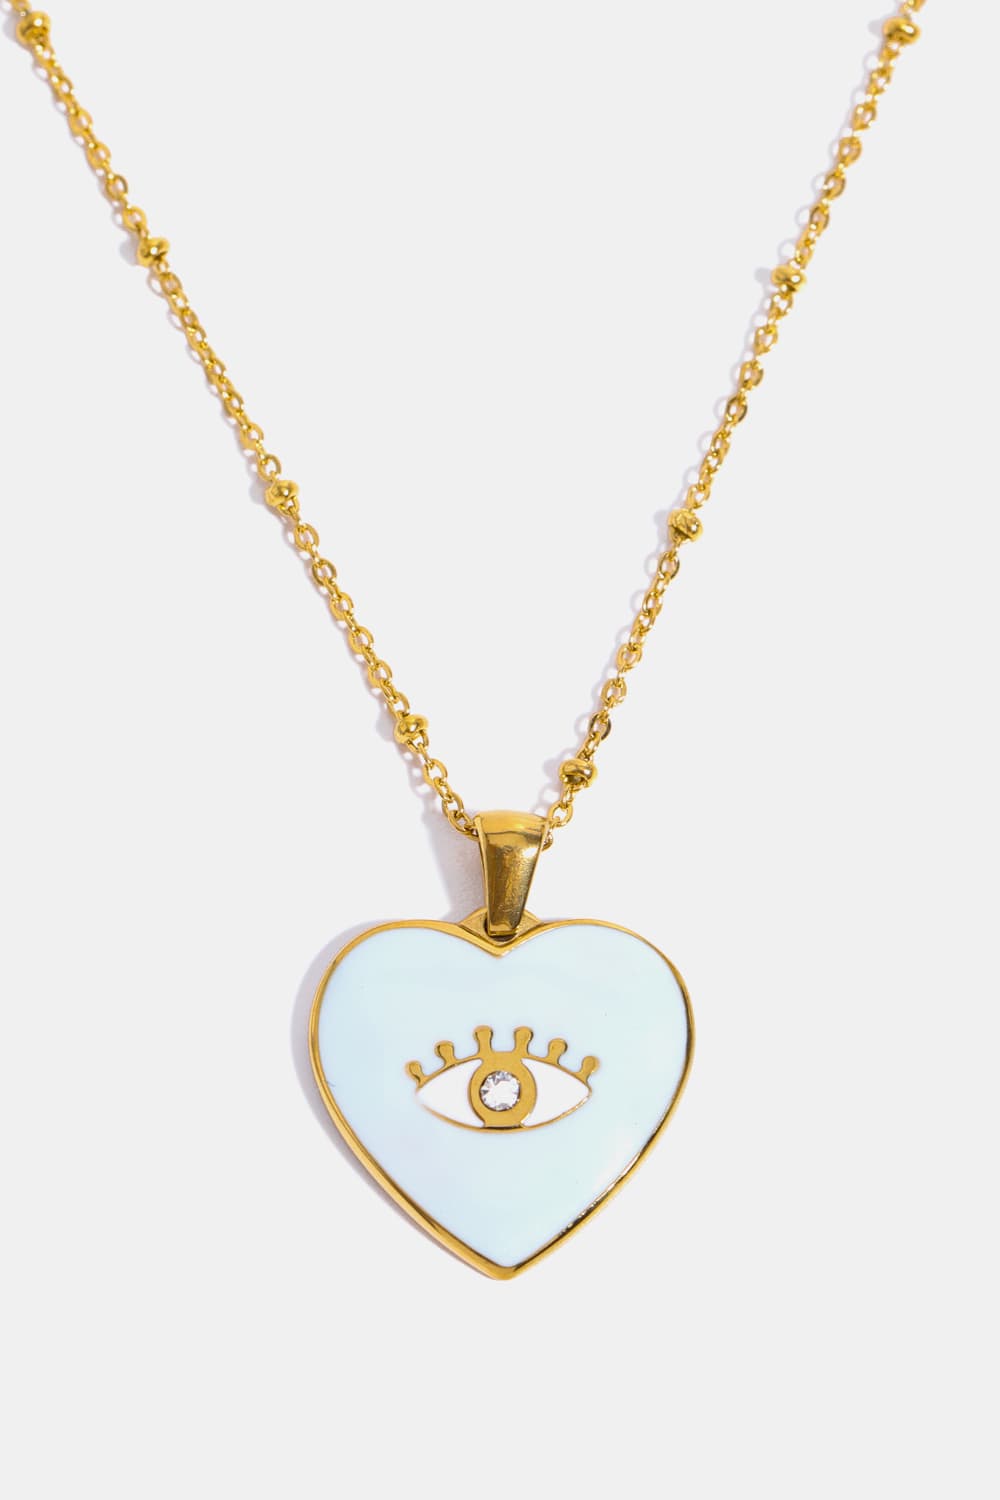 Heart & Evil Eye Shape 18K Gold Plated Pendant Necklace - Guy Christopher